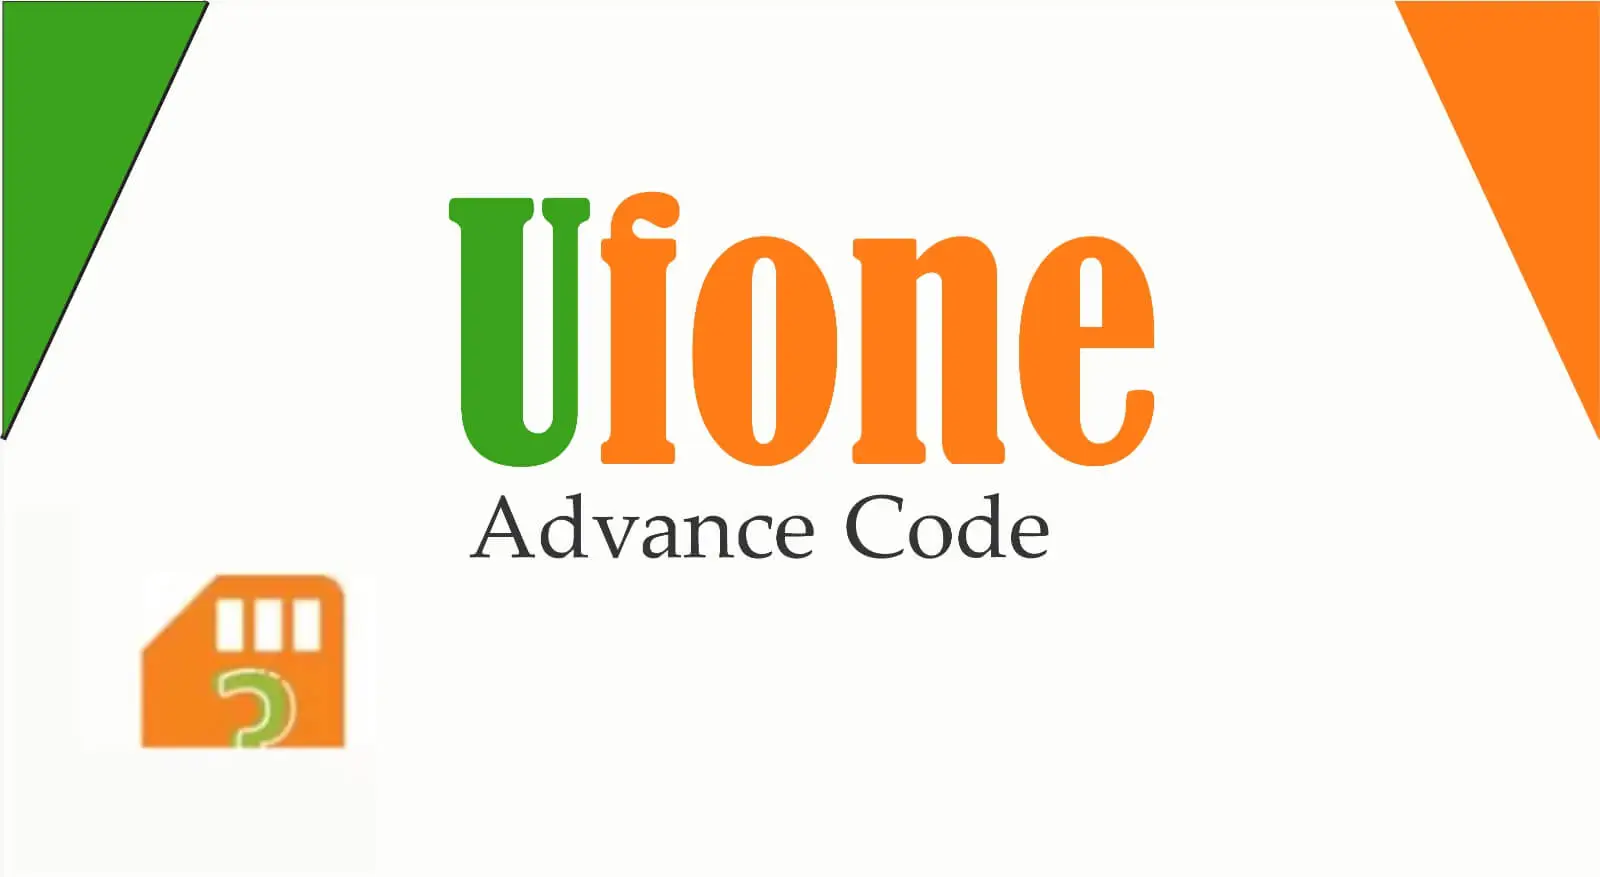 UFONE advance code